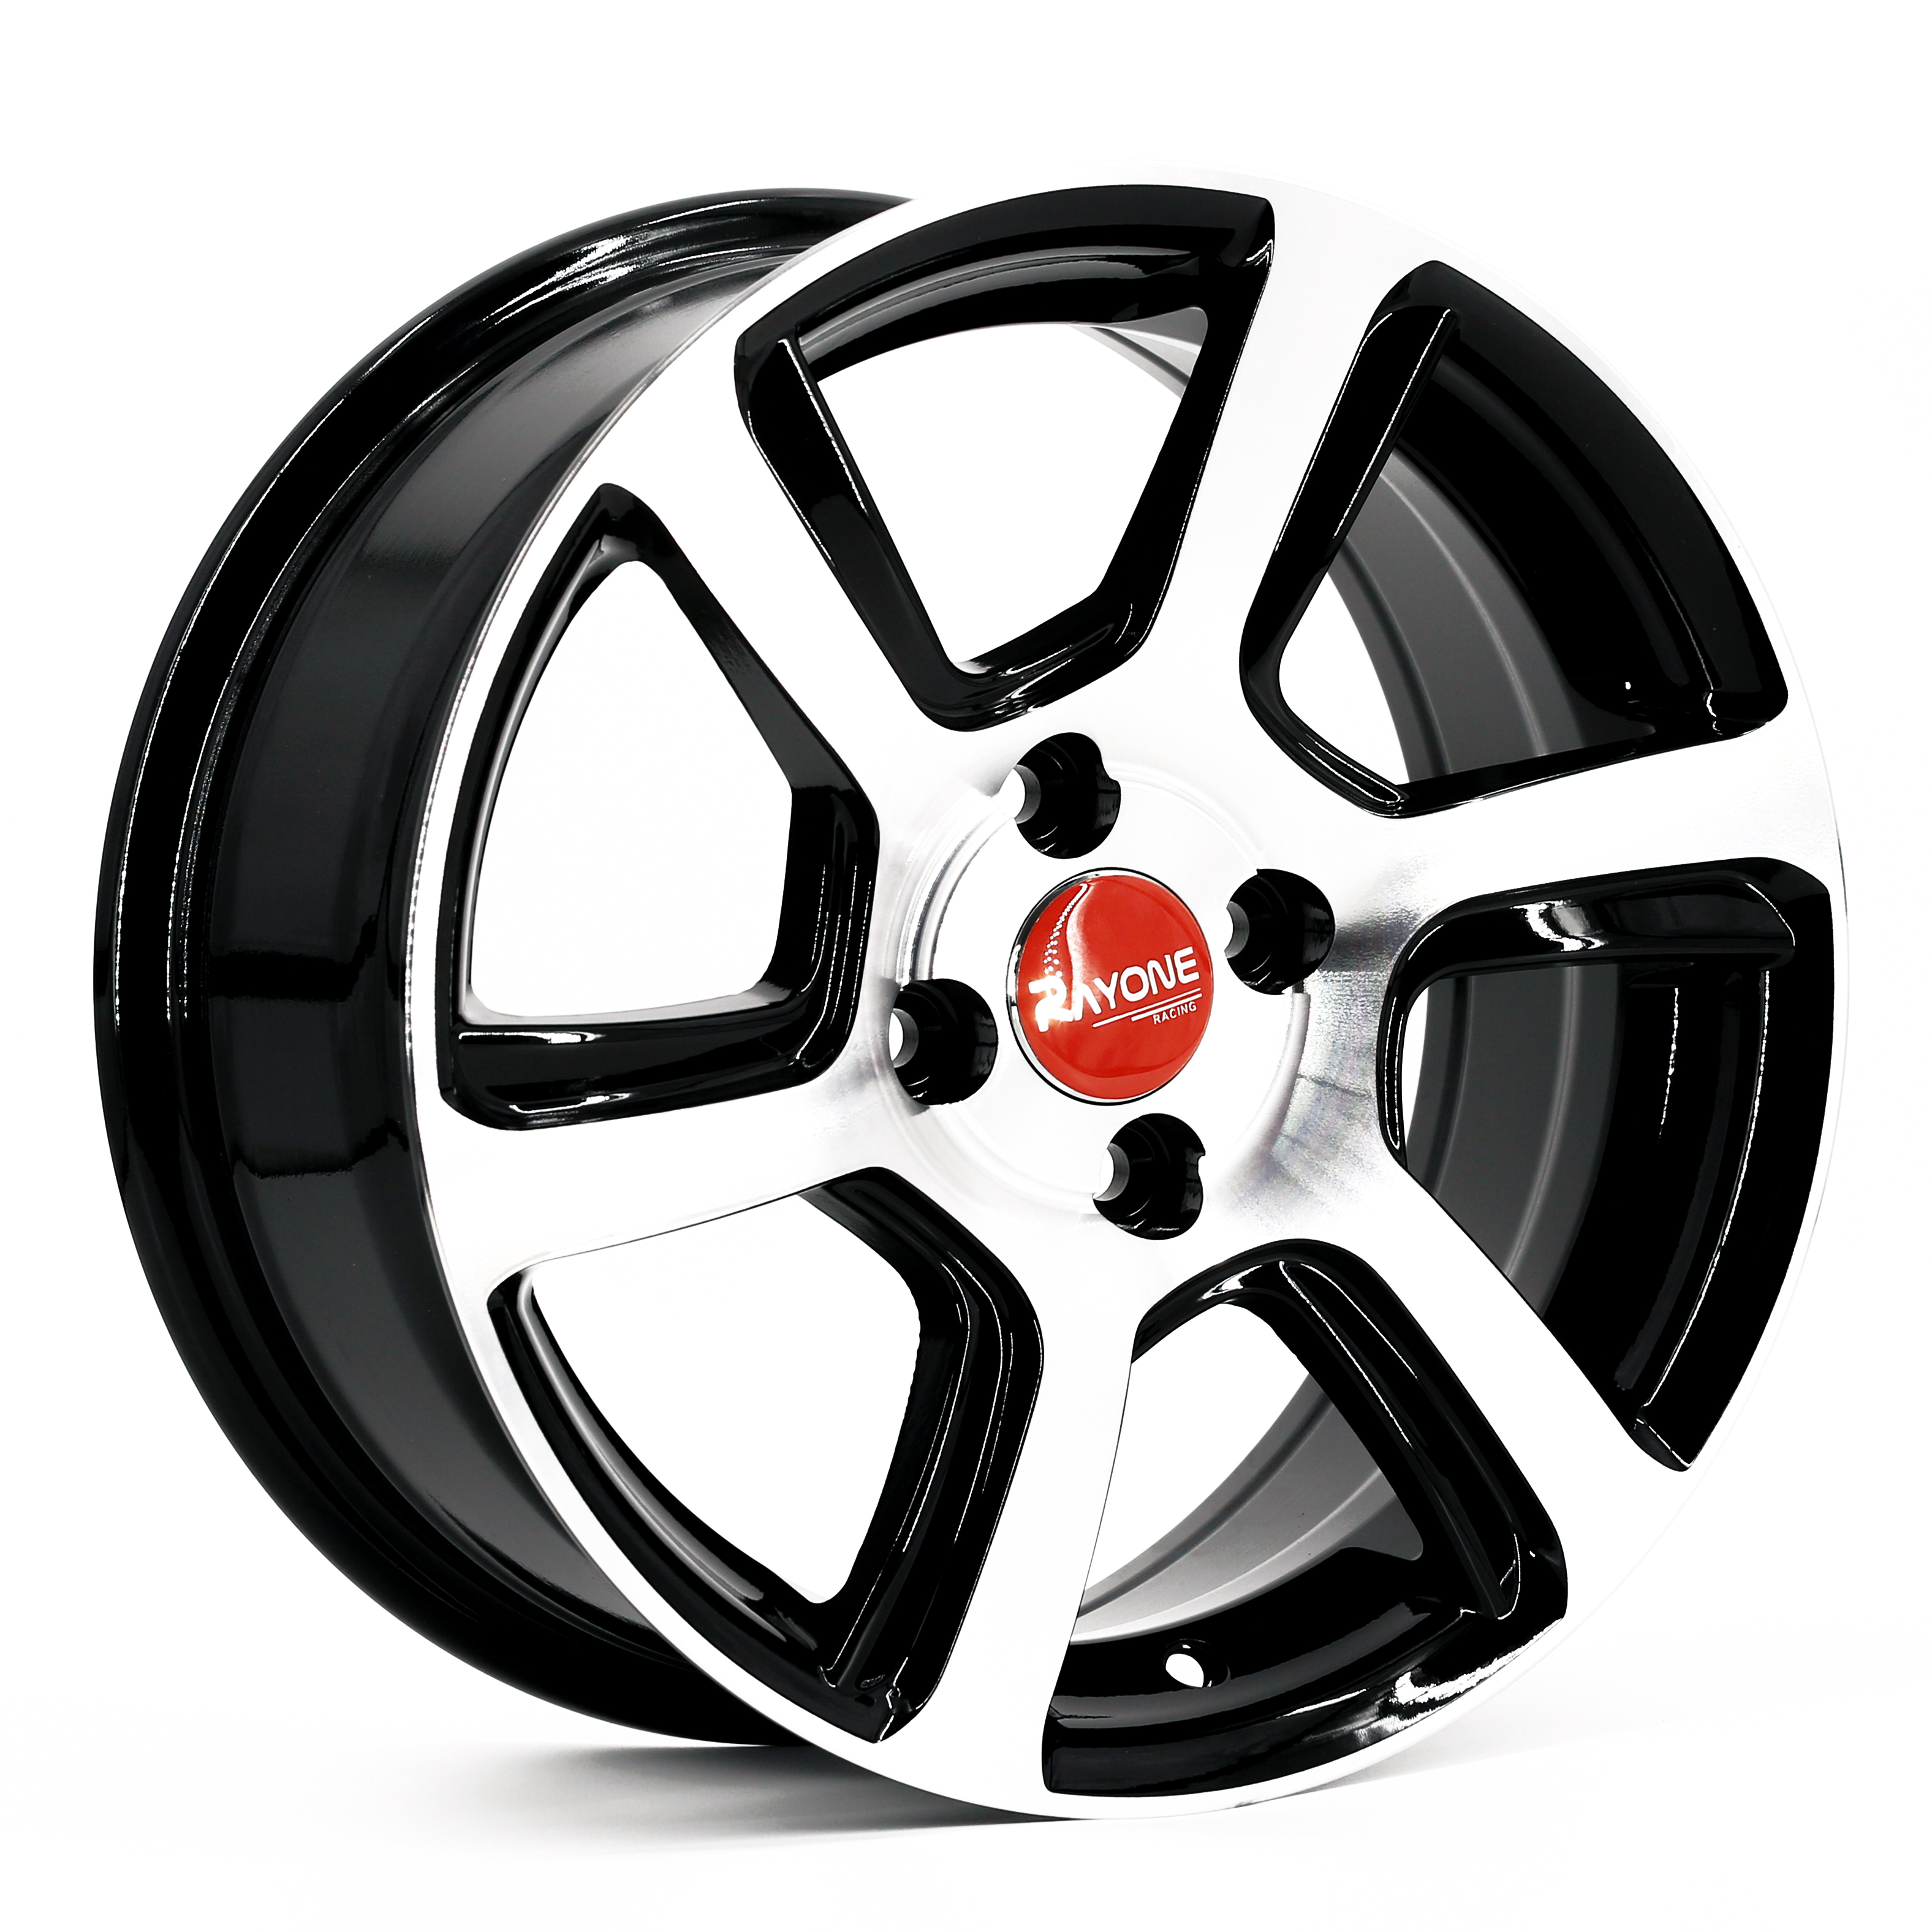 Best quality 3 Spoke Alloy Wheels For Car - Aftermarket Aluminum Alloy Wheel Bolero Alloy Wheels 15 Inch – Rayone